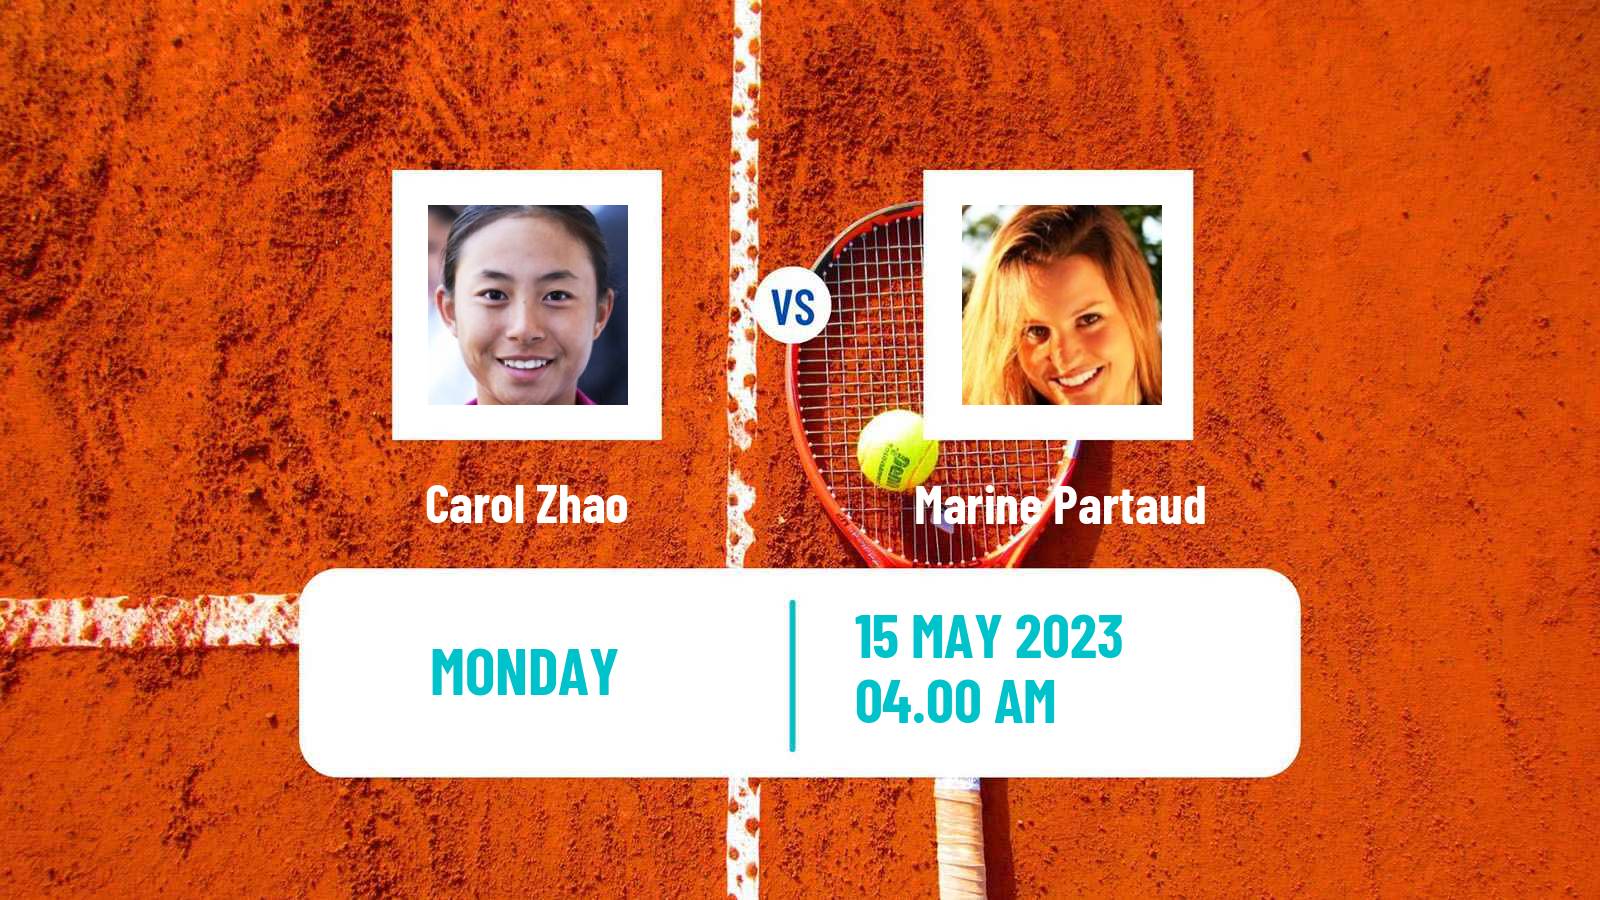 Tennis ATP Challenger Carol Zhao - Marine Partaud